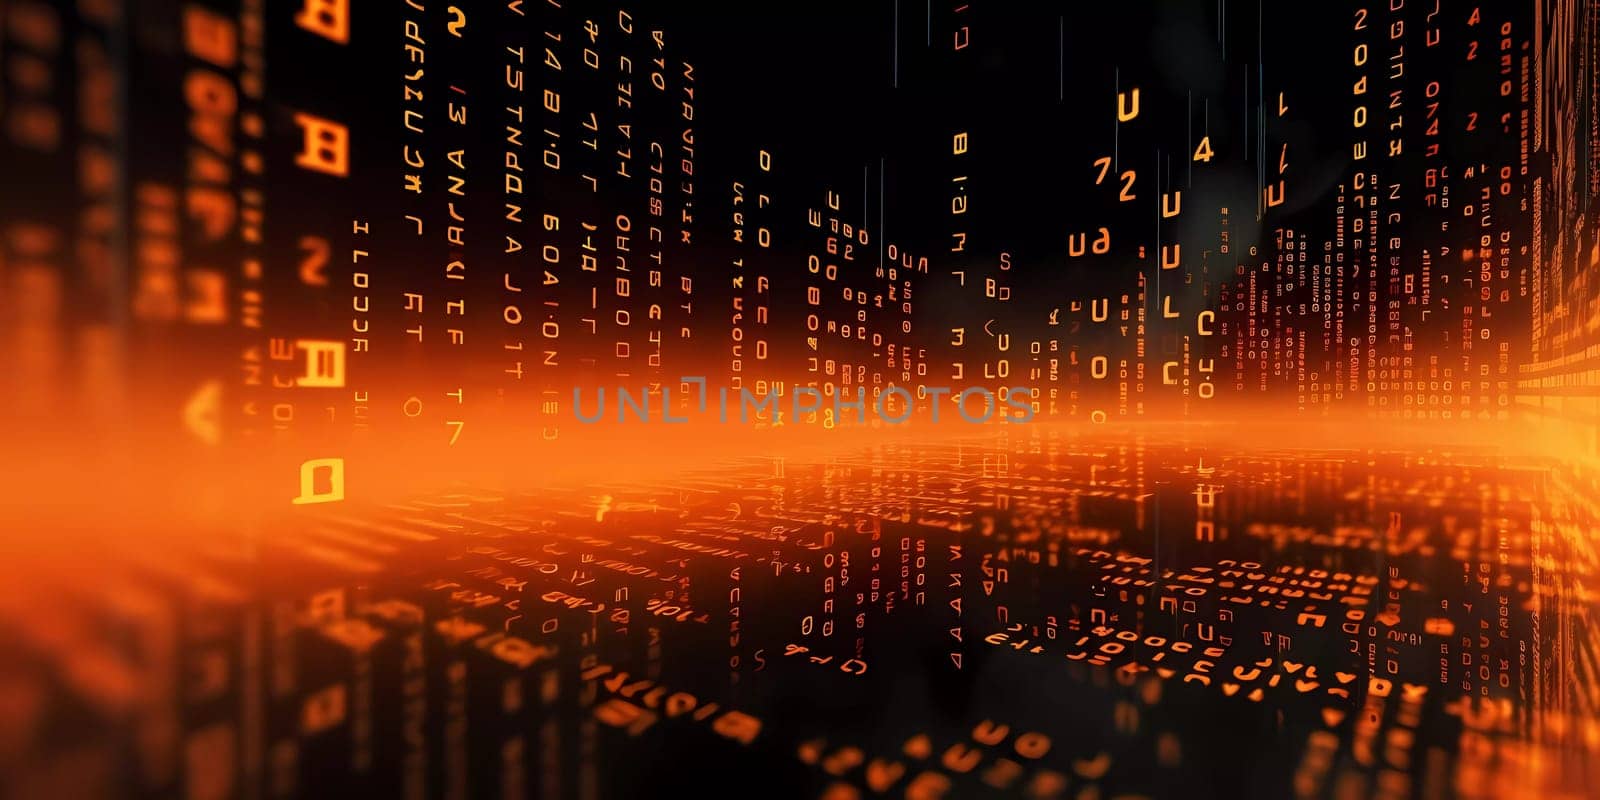 Computer background with orange digits and symbols on a black background. by sergeykoshkin